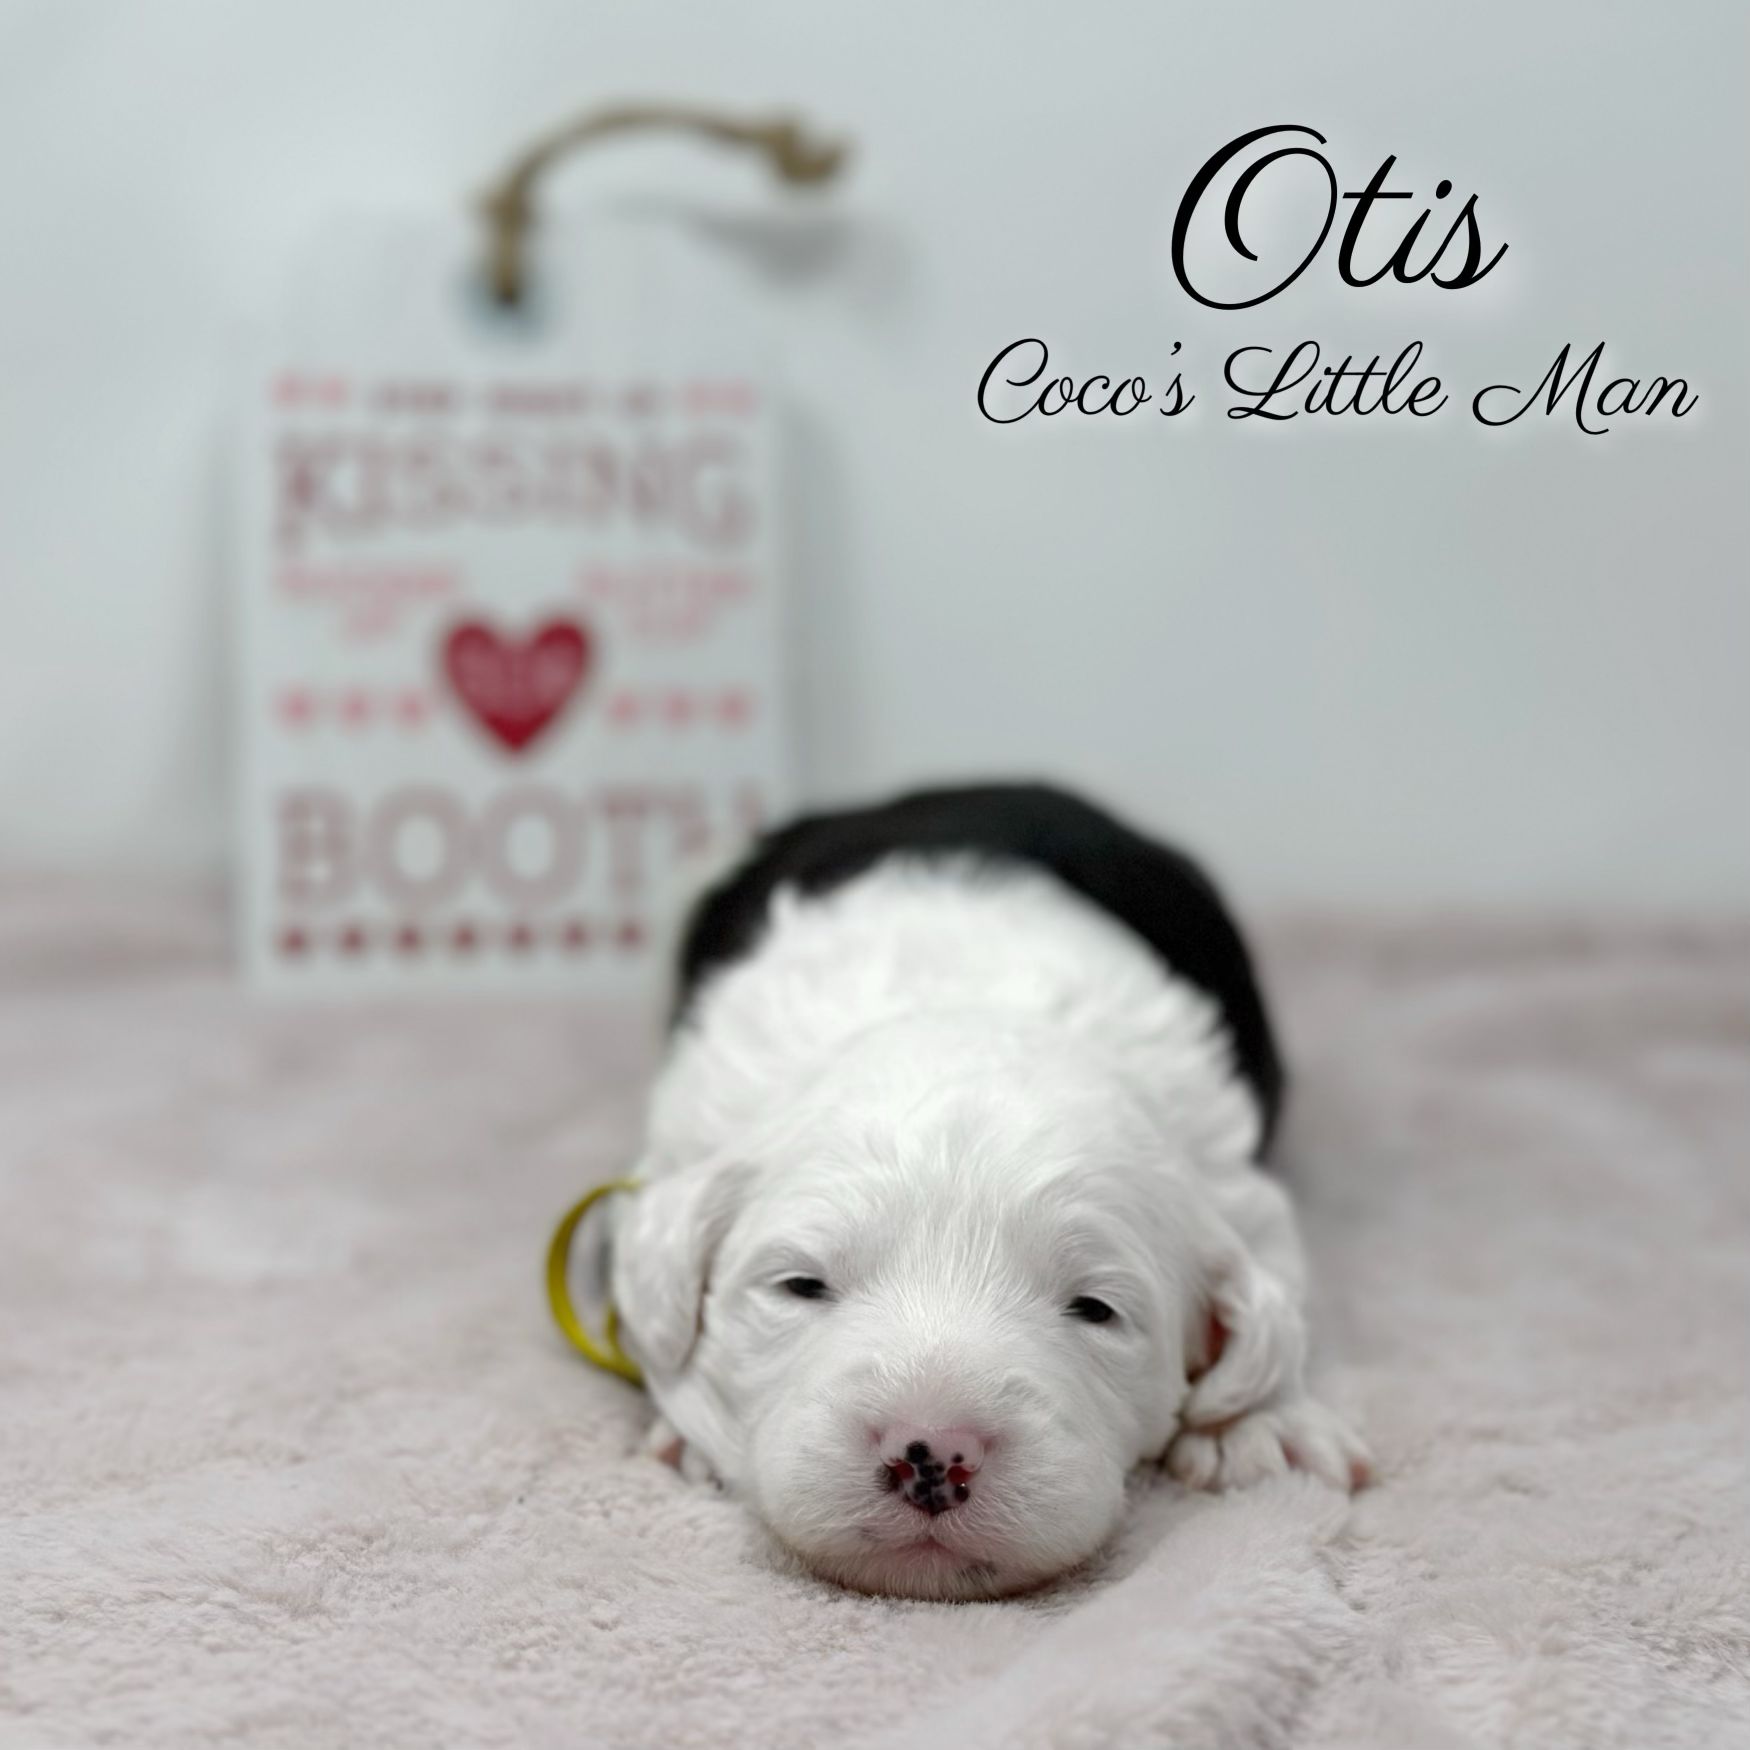 Otis Coco's Little Man